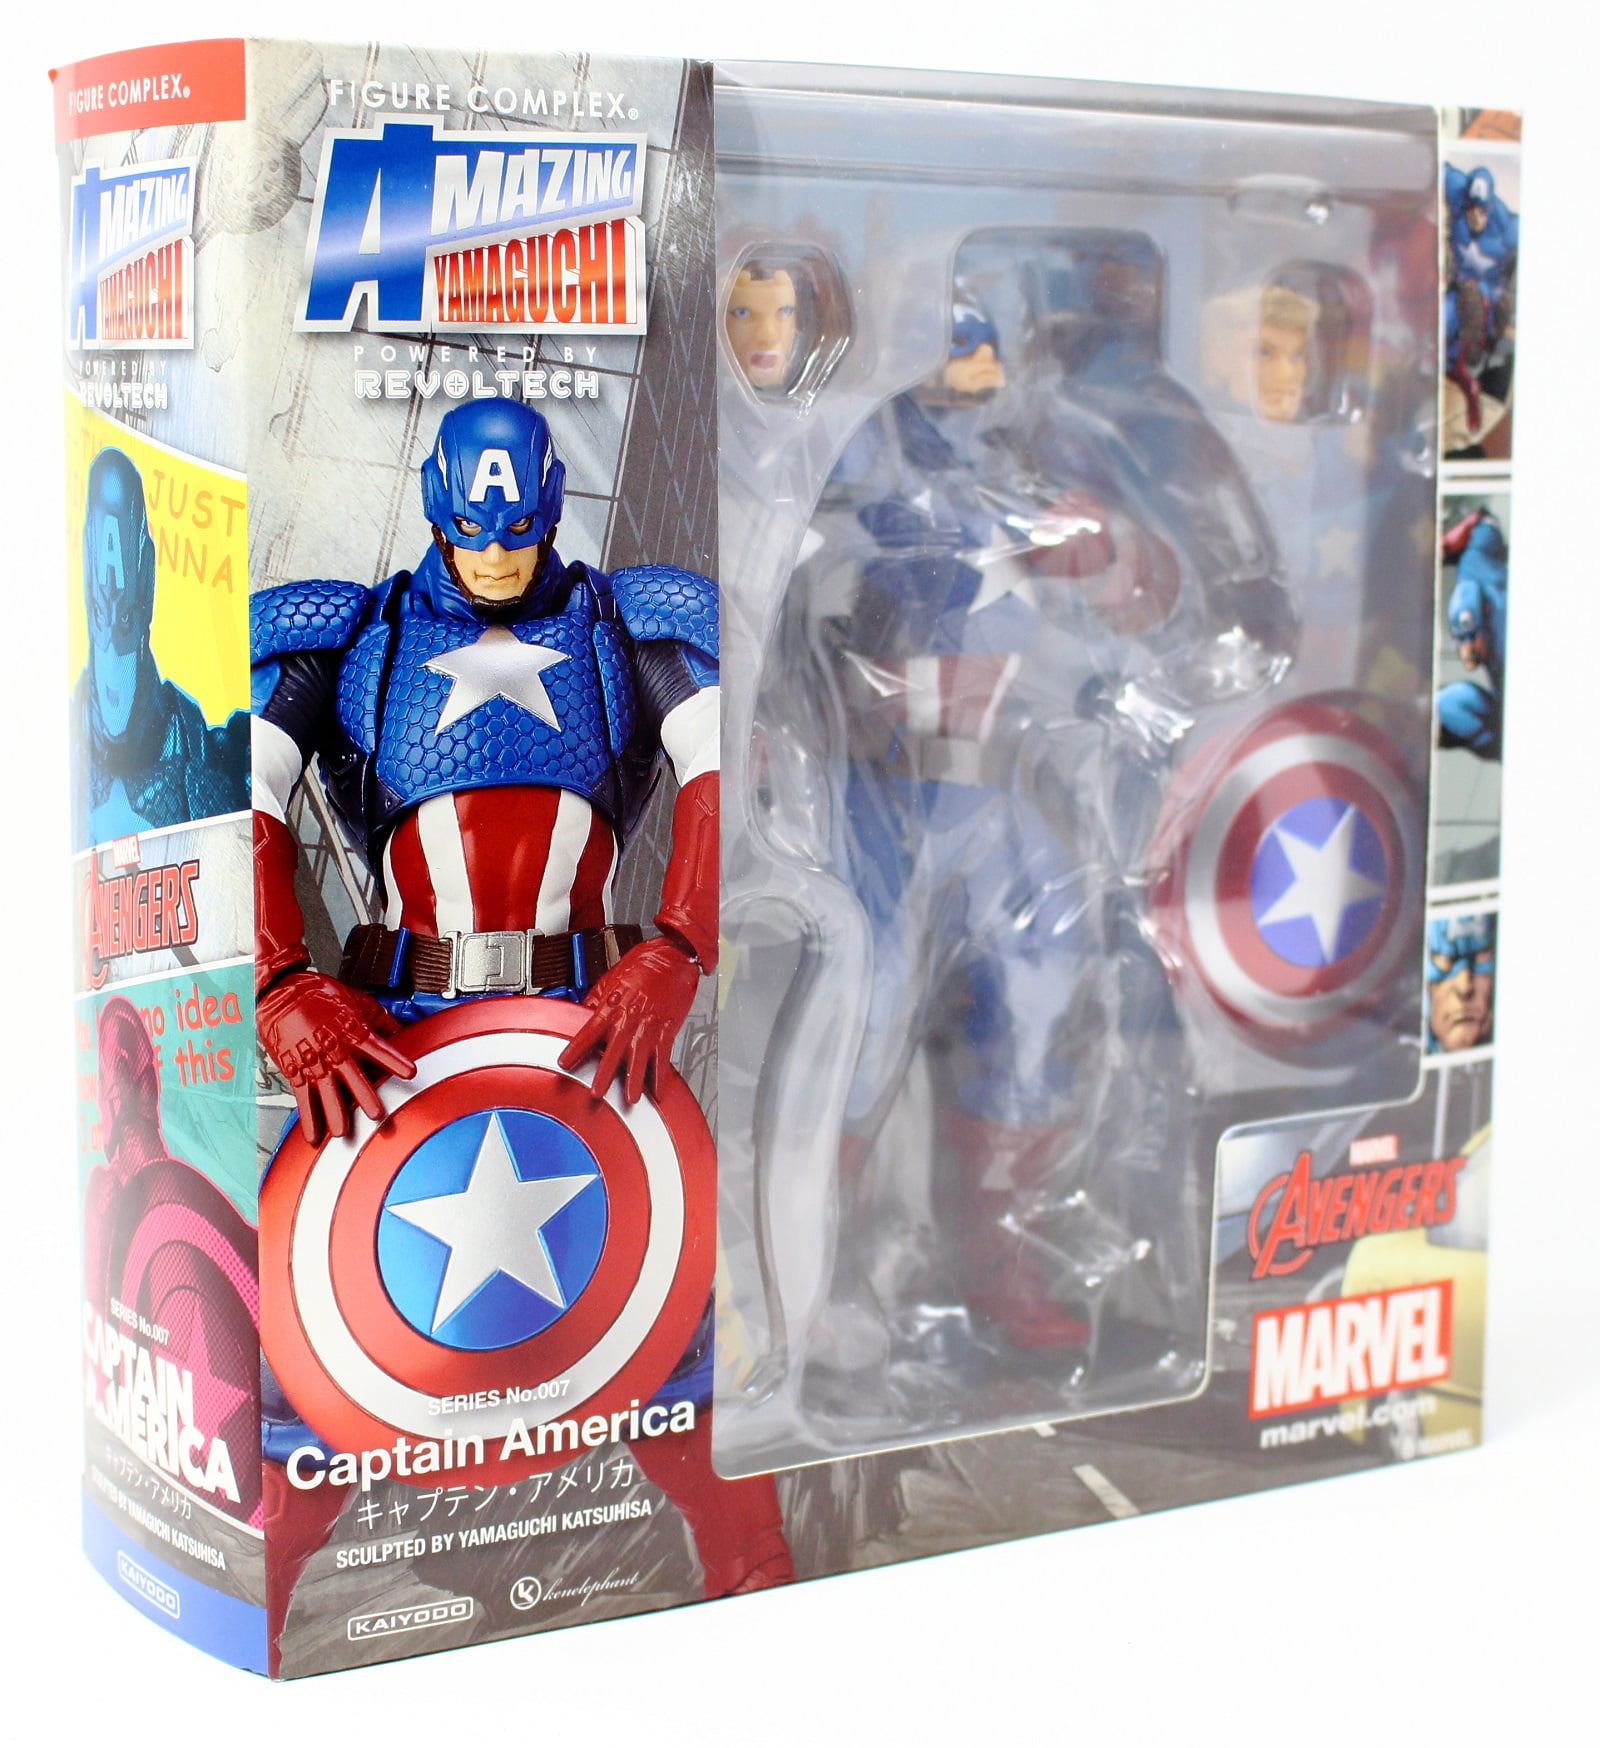 Kaiyodo Revoltech Amazing Yamaguchi Captain America Action Figure Toy New in Box 